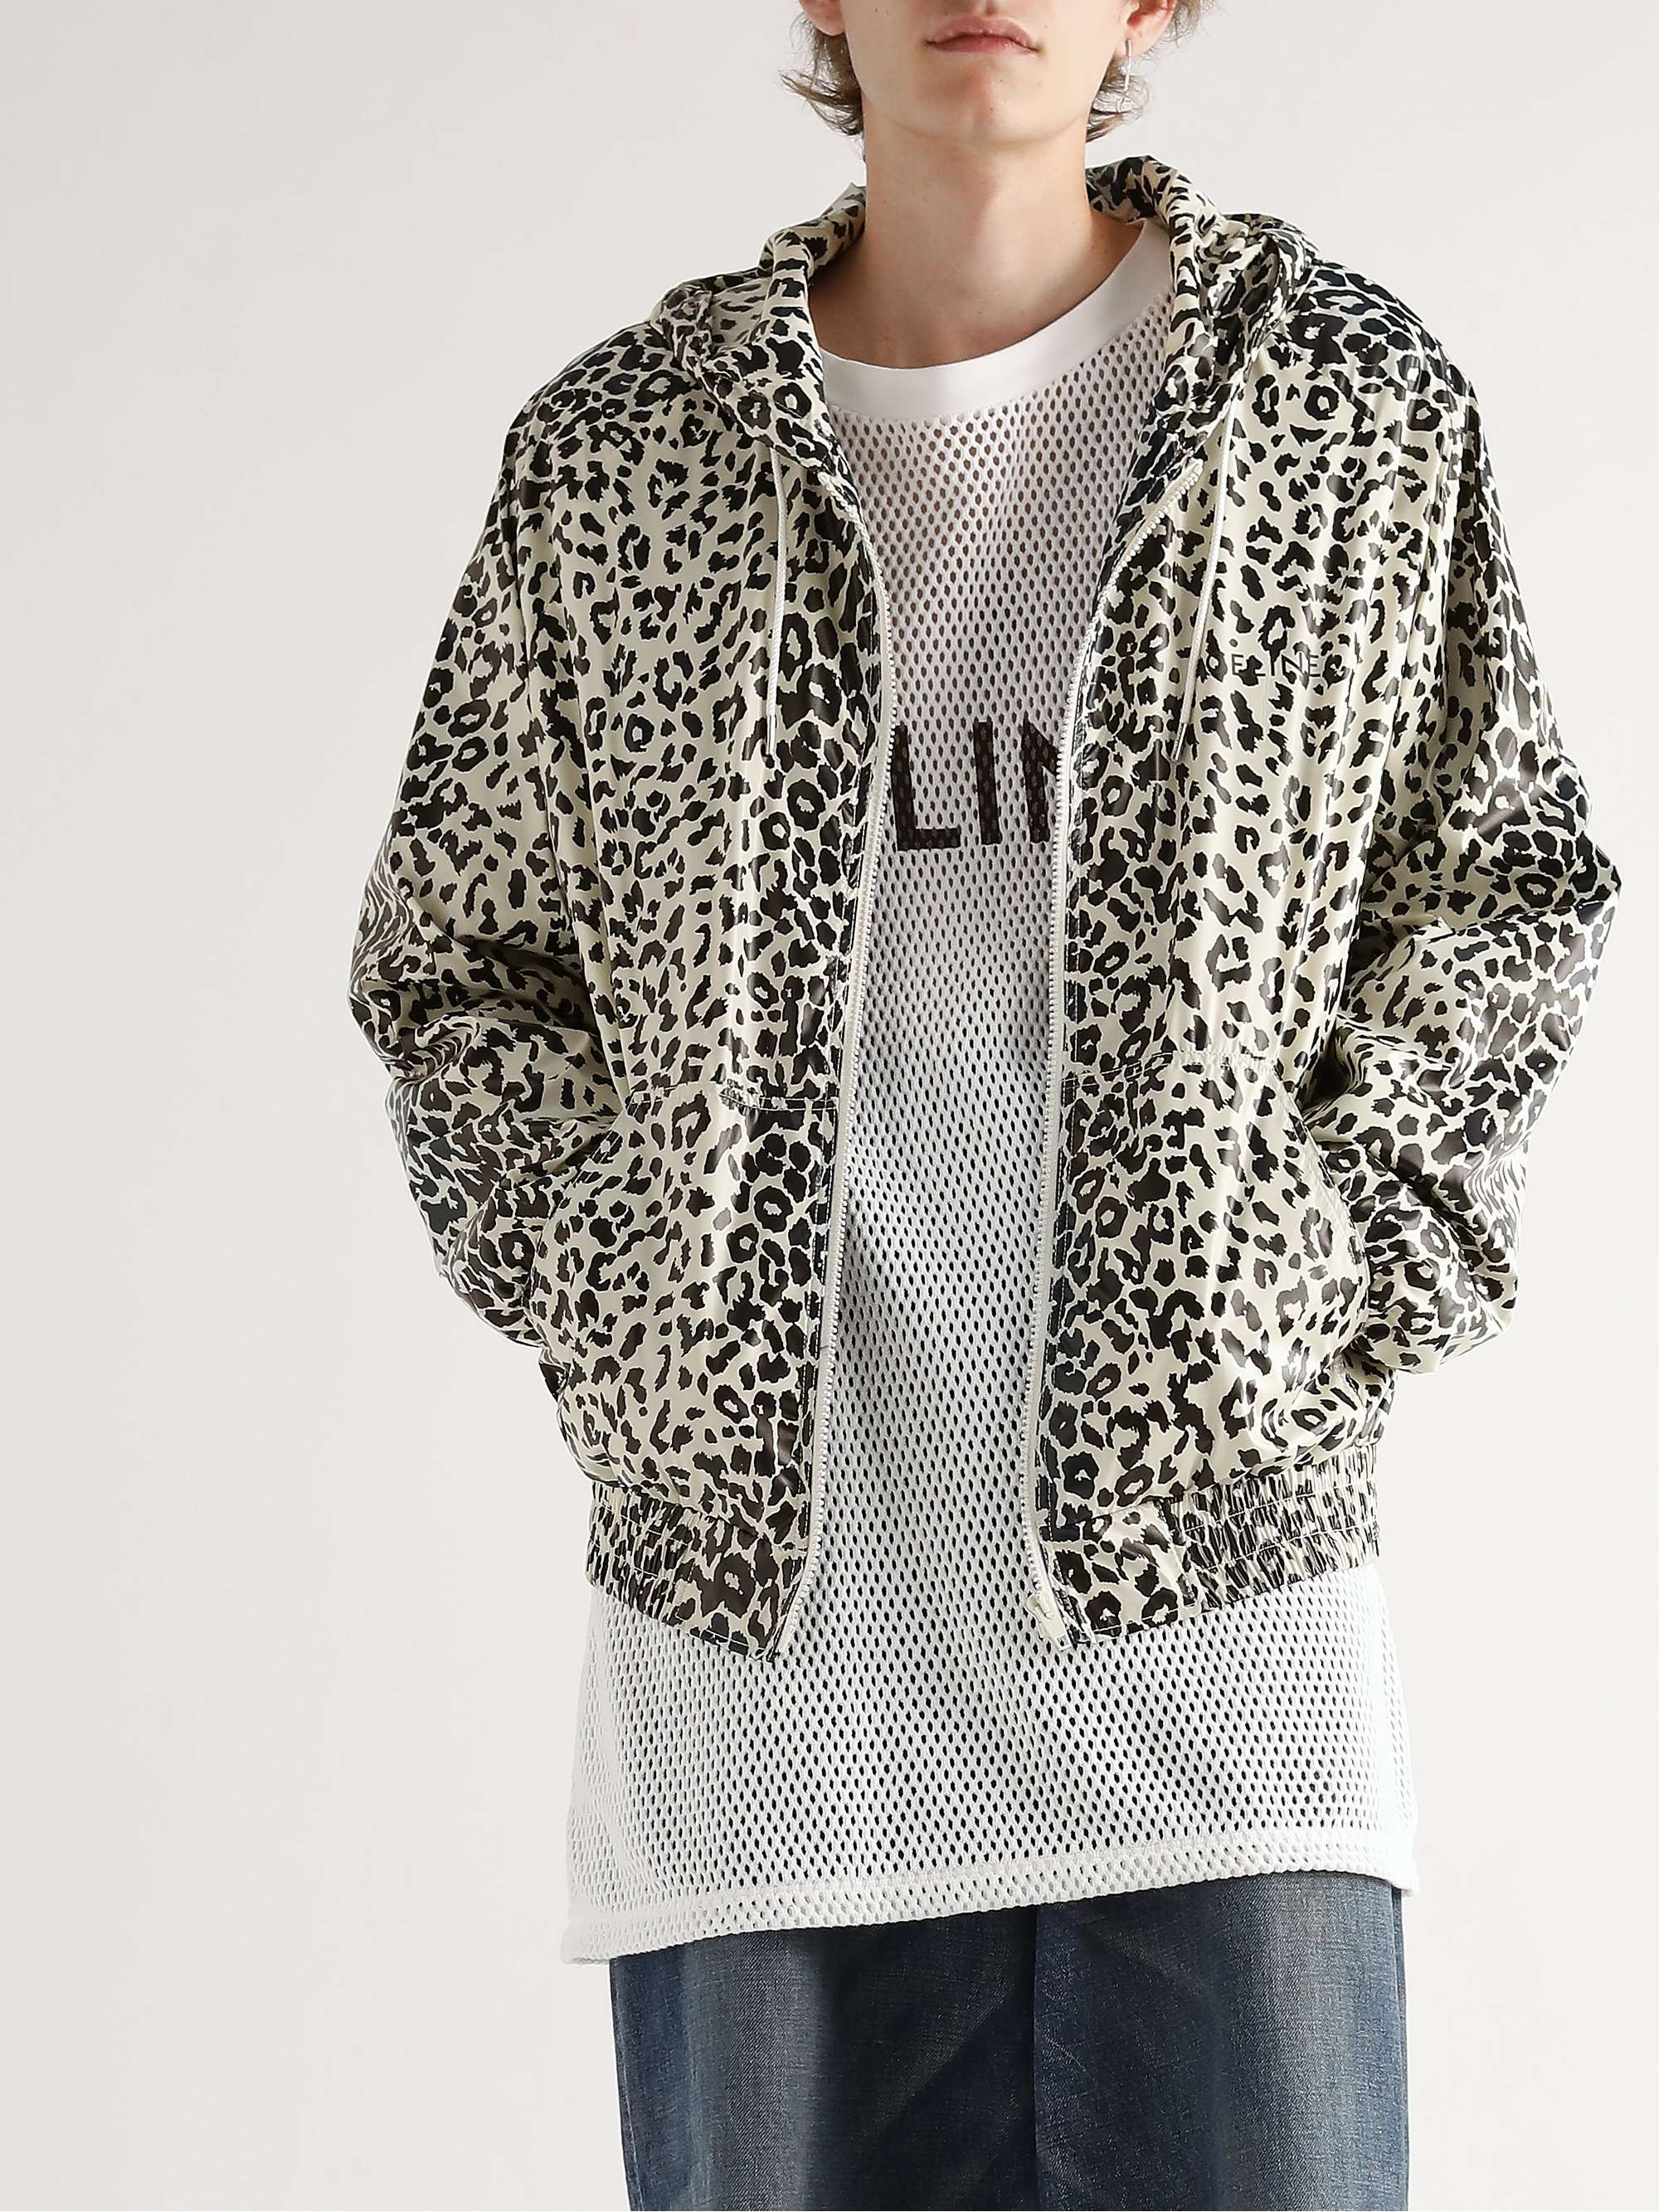 CELINE HOMME Leopard-Print Shell Hooded Jacket